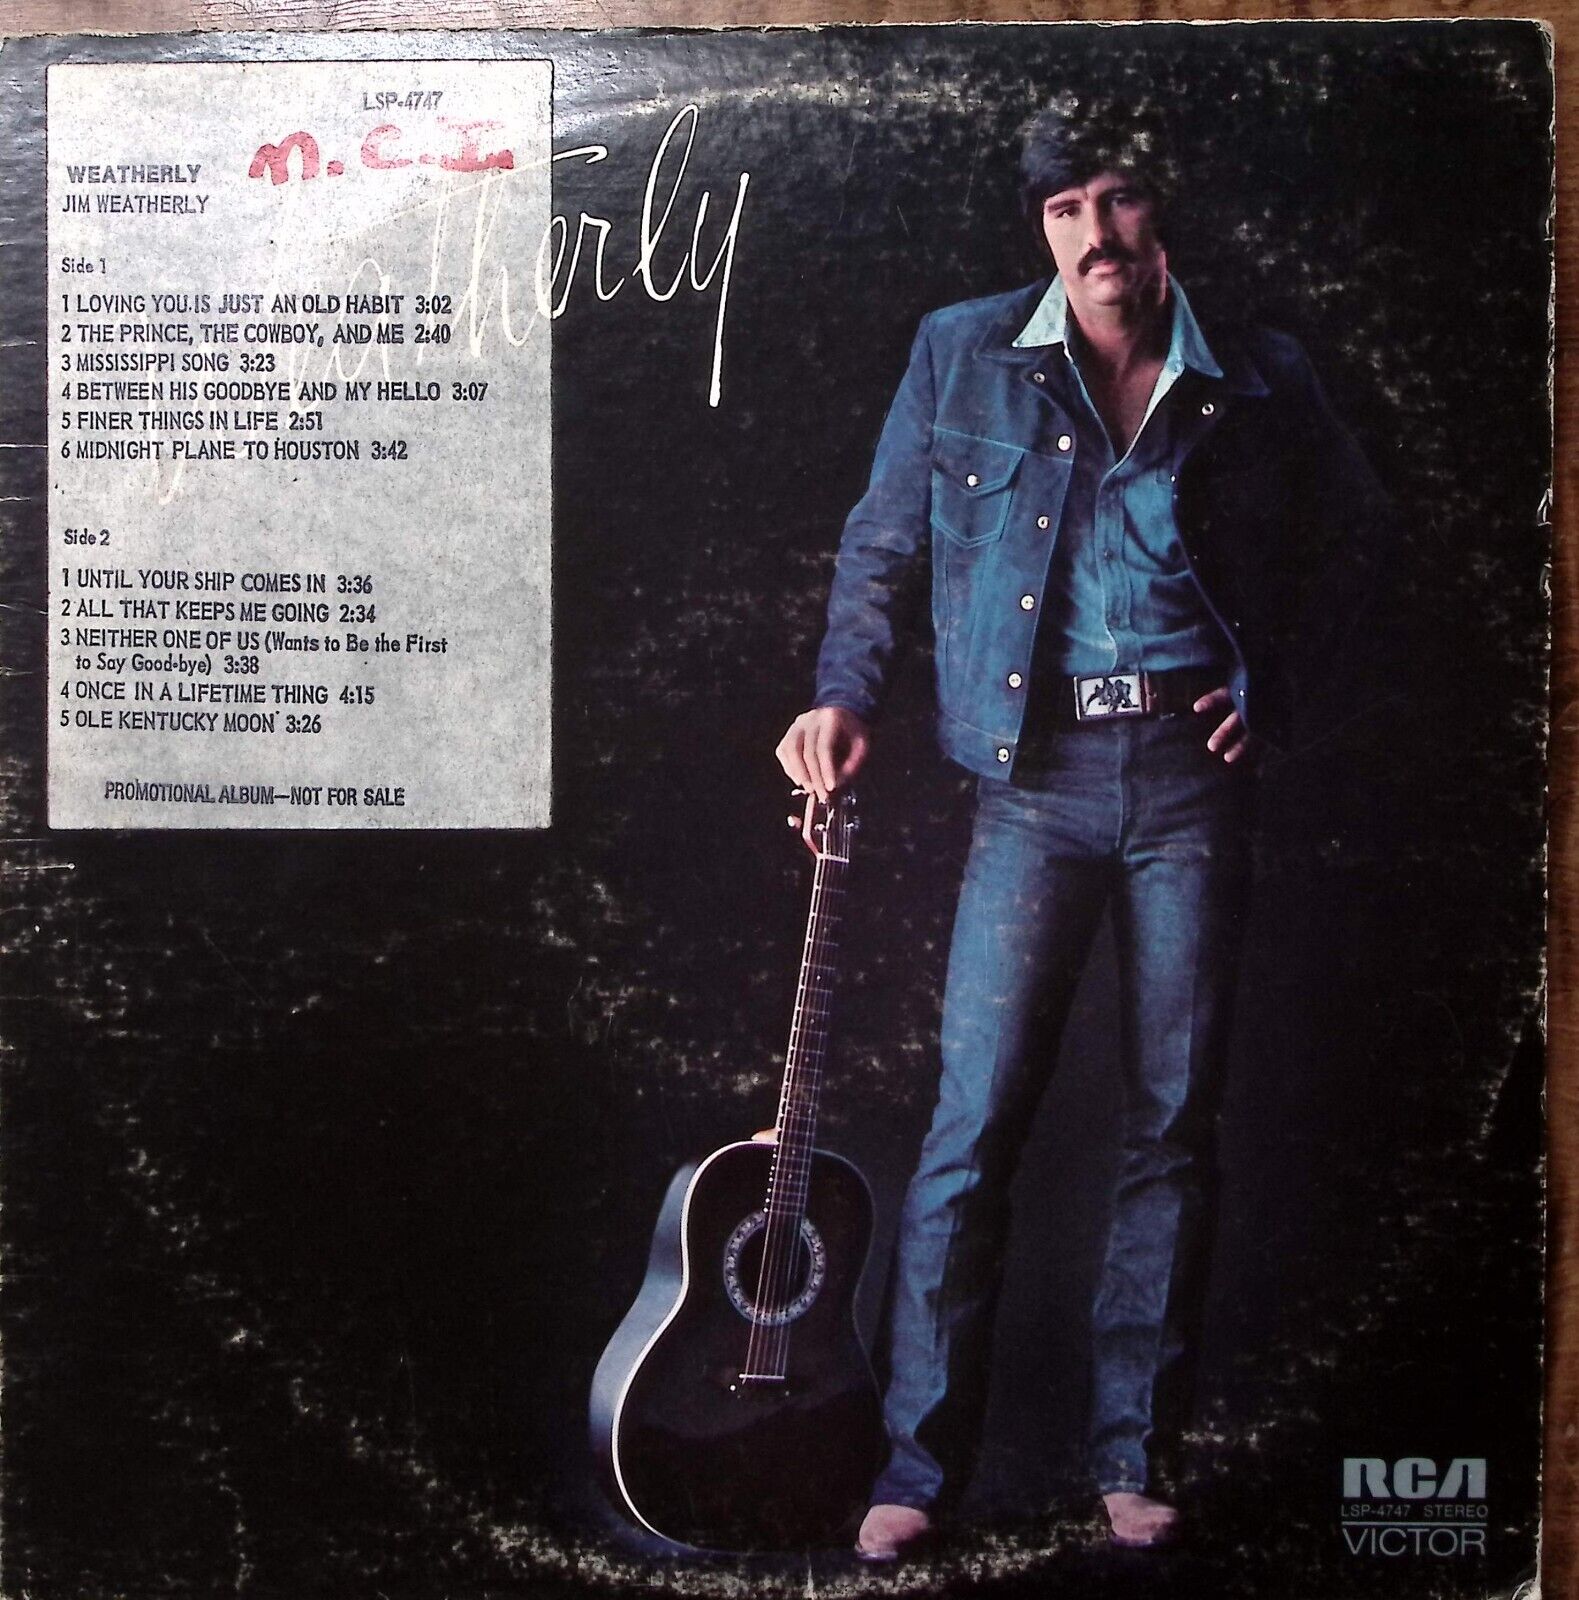 JIM WEATHERLY WEATHERLY RCA VICTOR RECORDS VINYL LP 199-59